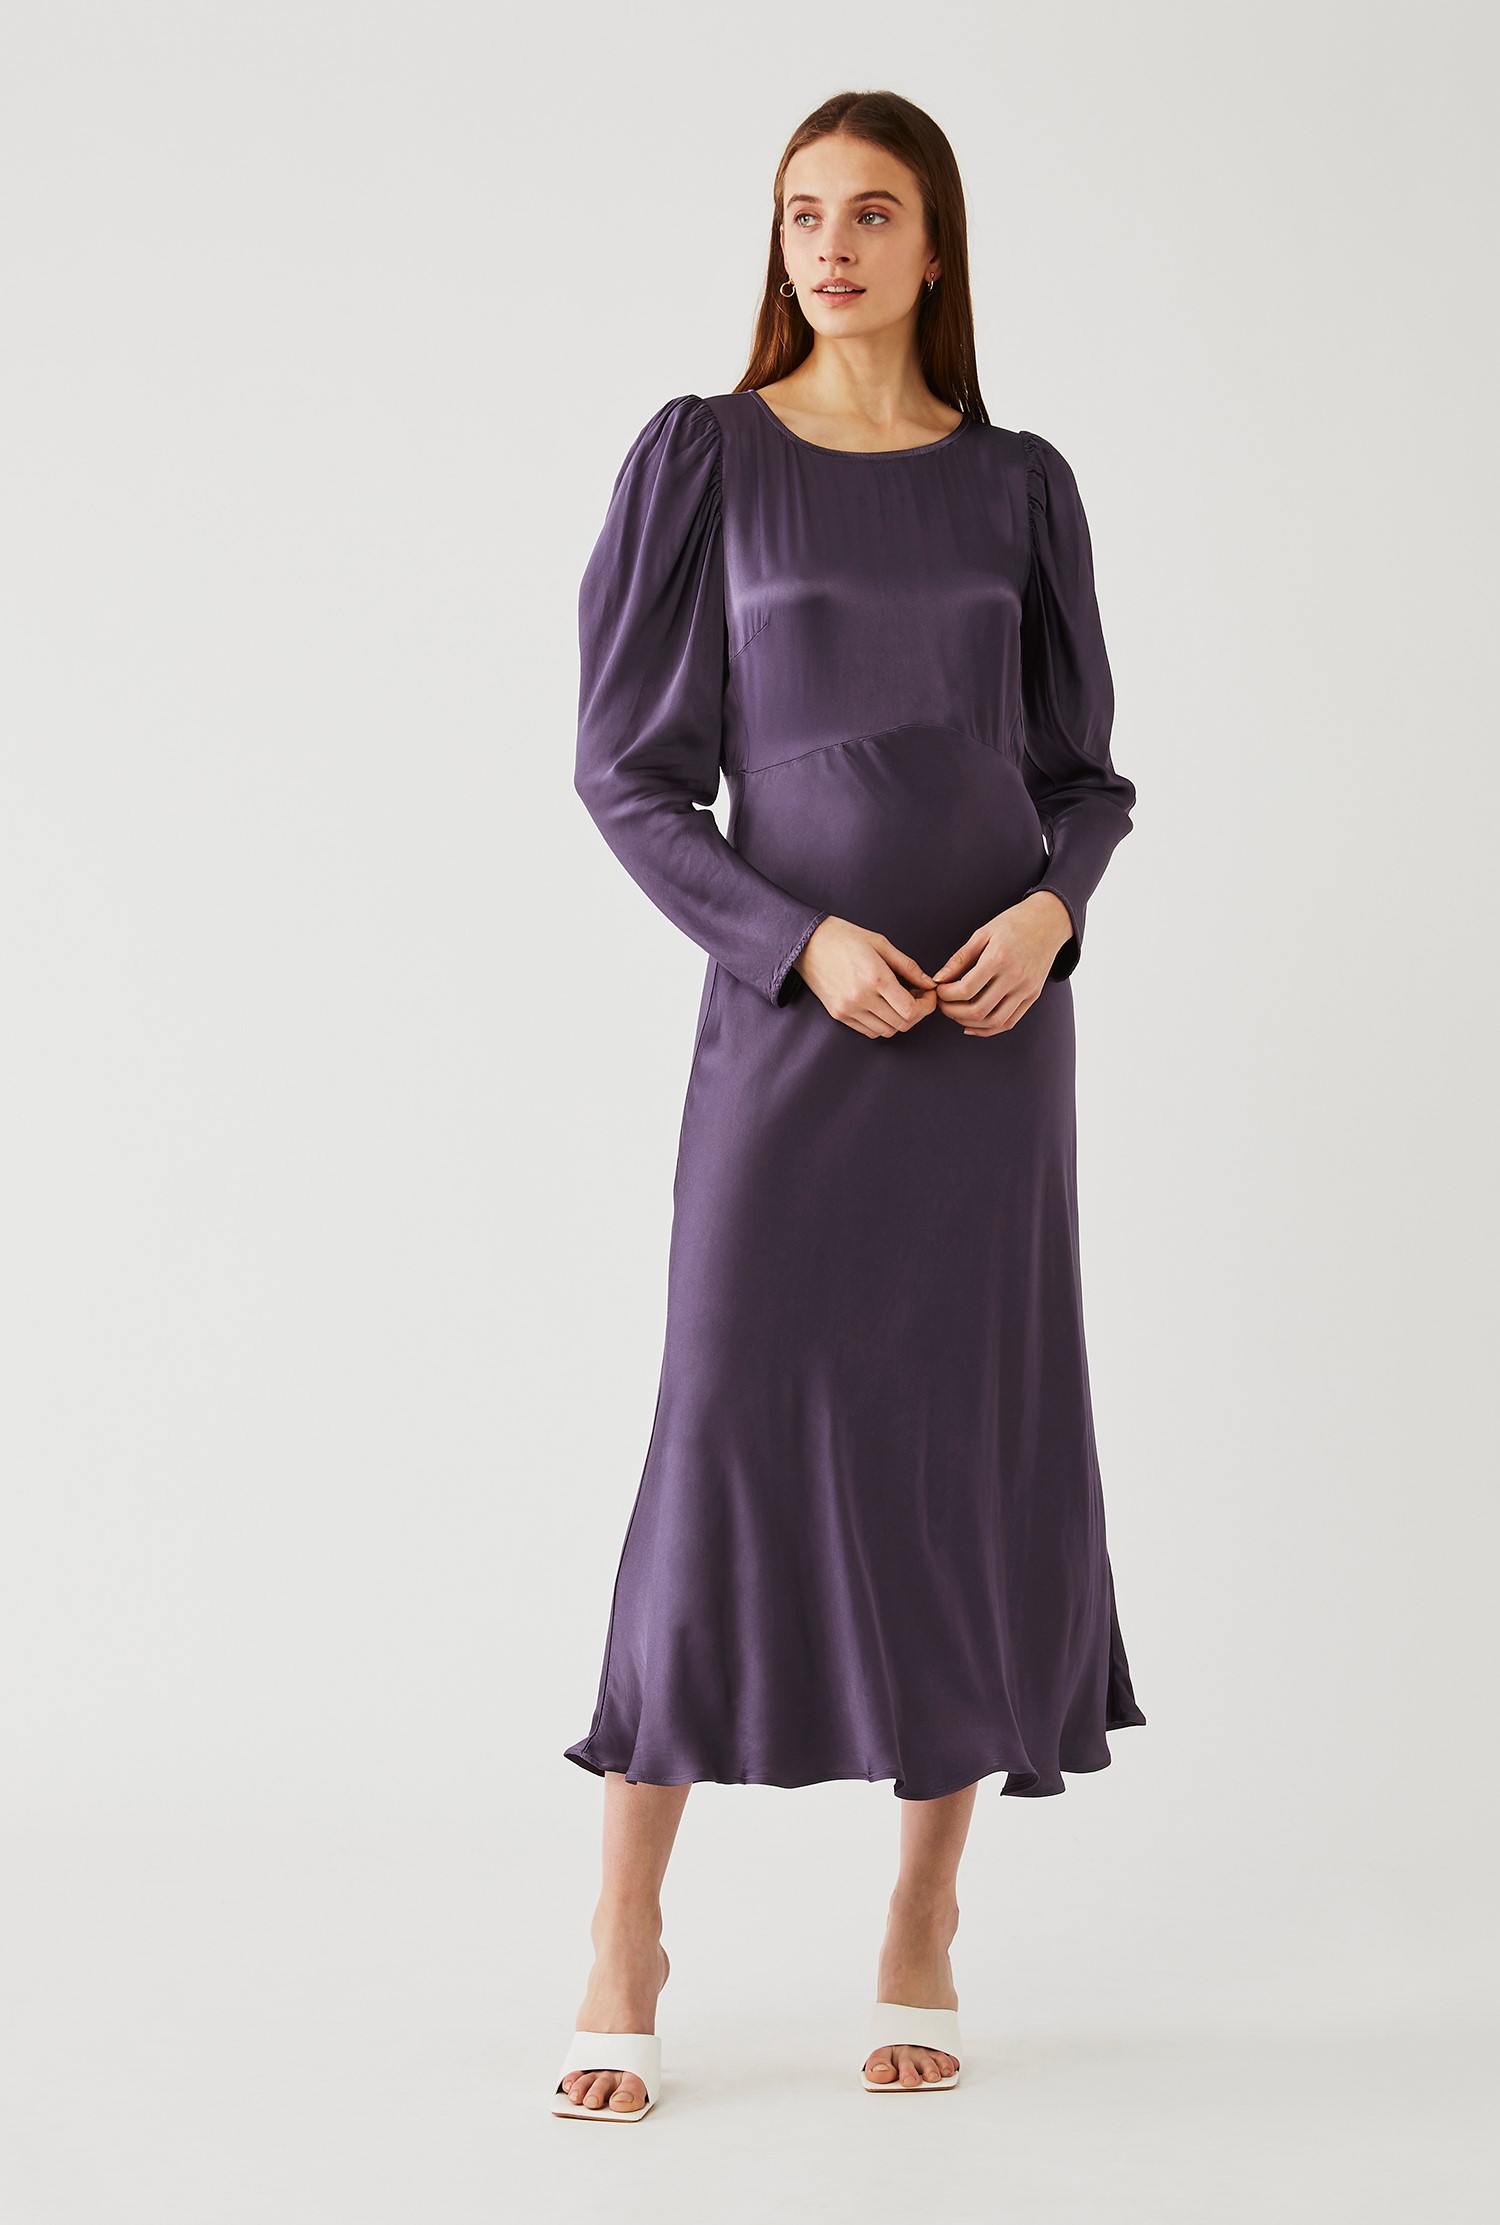 Rosaleen Deep Mauve Satin Dress | Ghost London